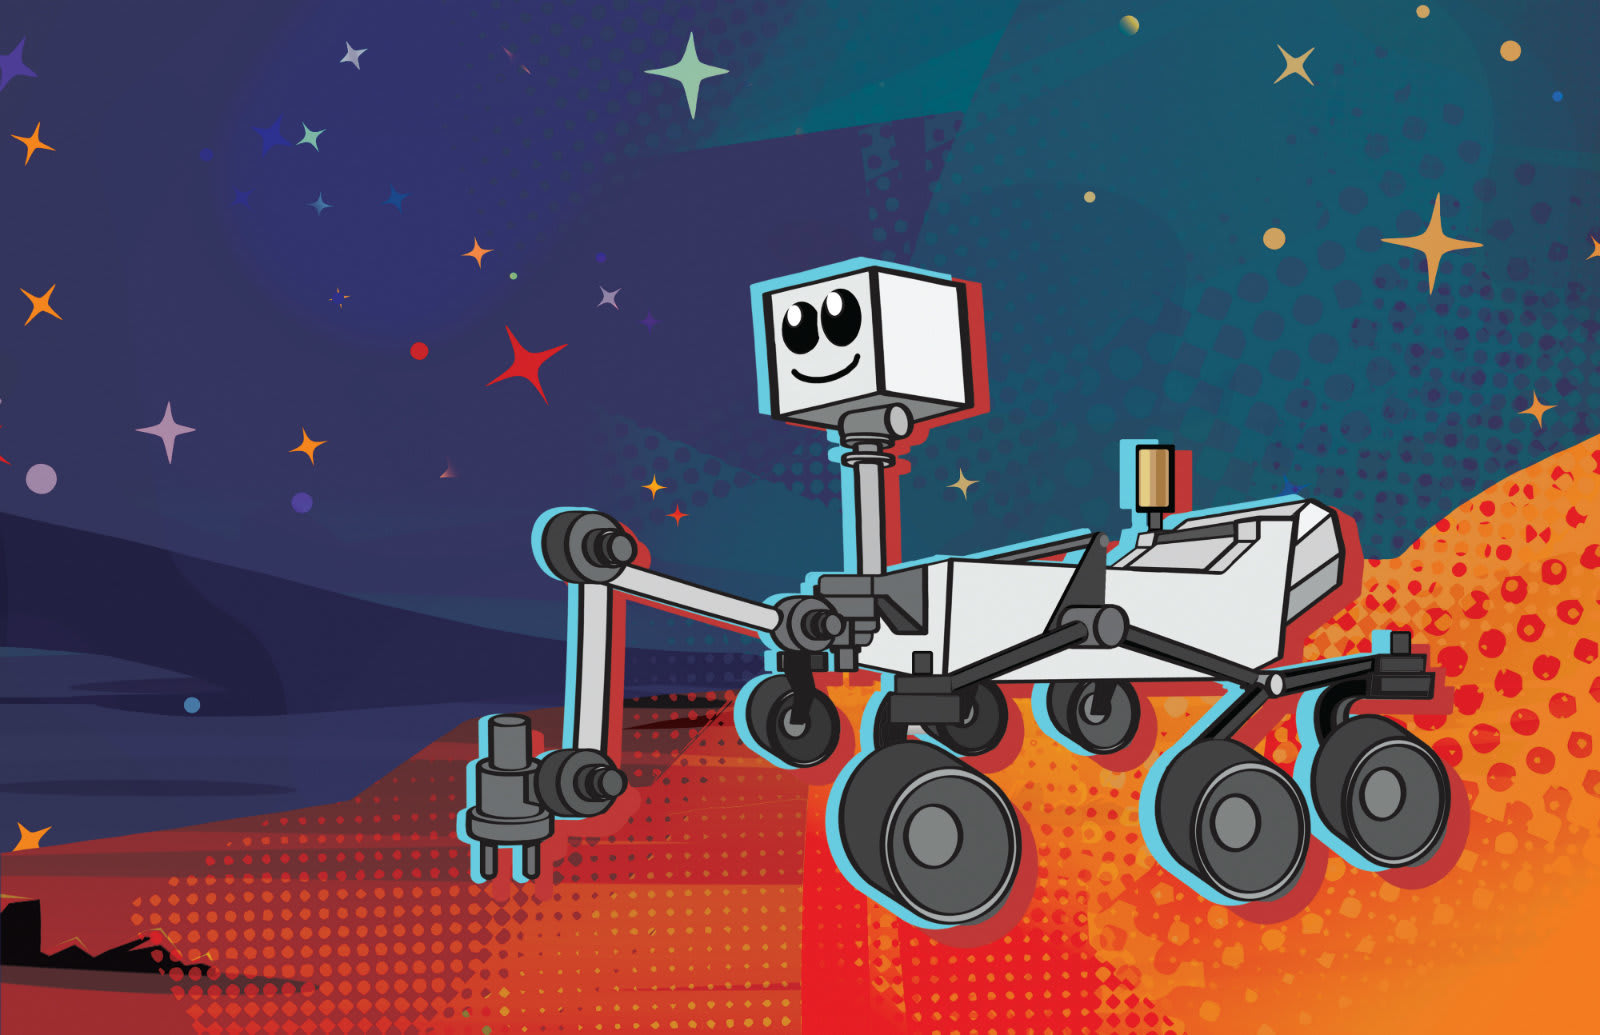 Nasa 高校生以下対象の火星探査車命名コンテスト開催 希望者の名前を火星に届けるキャンペーンも Engadget 日本版